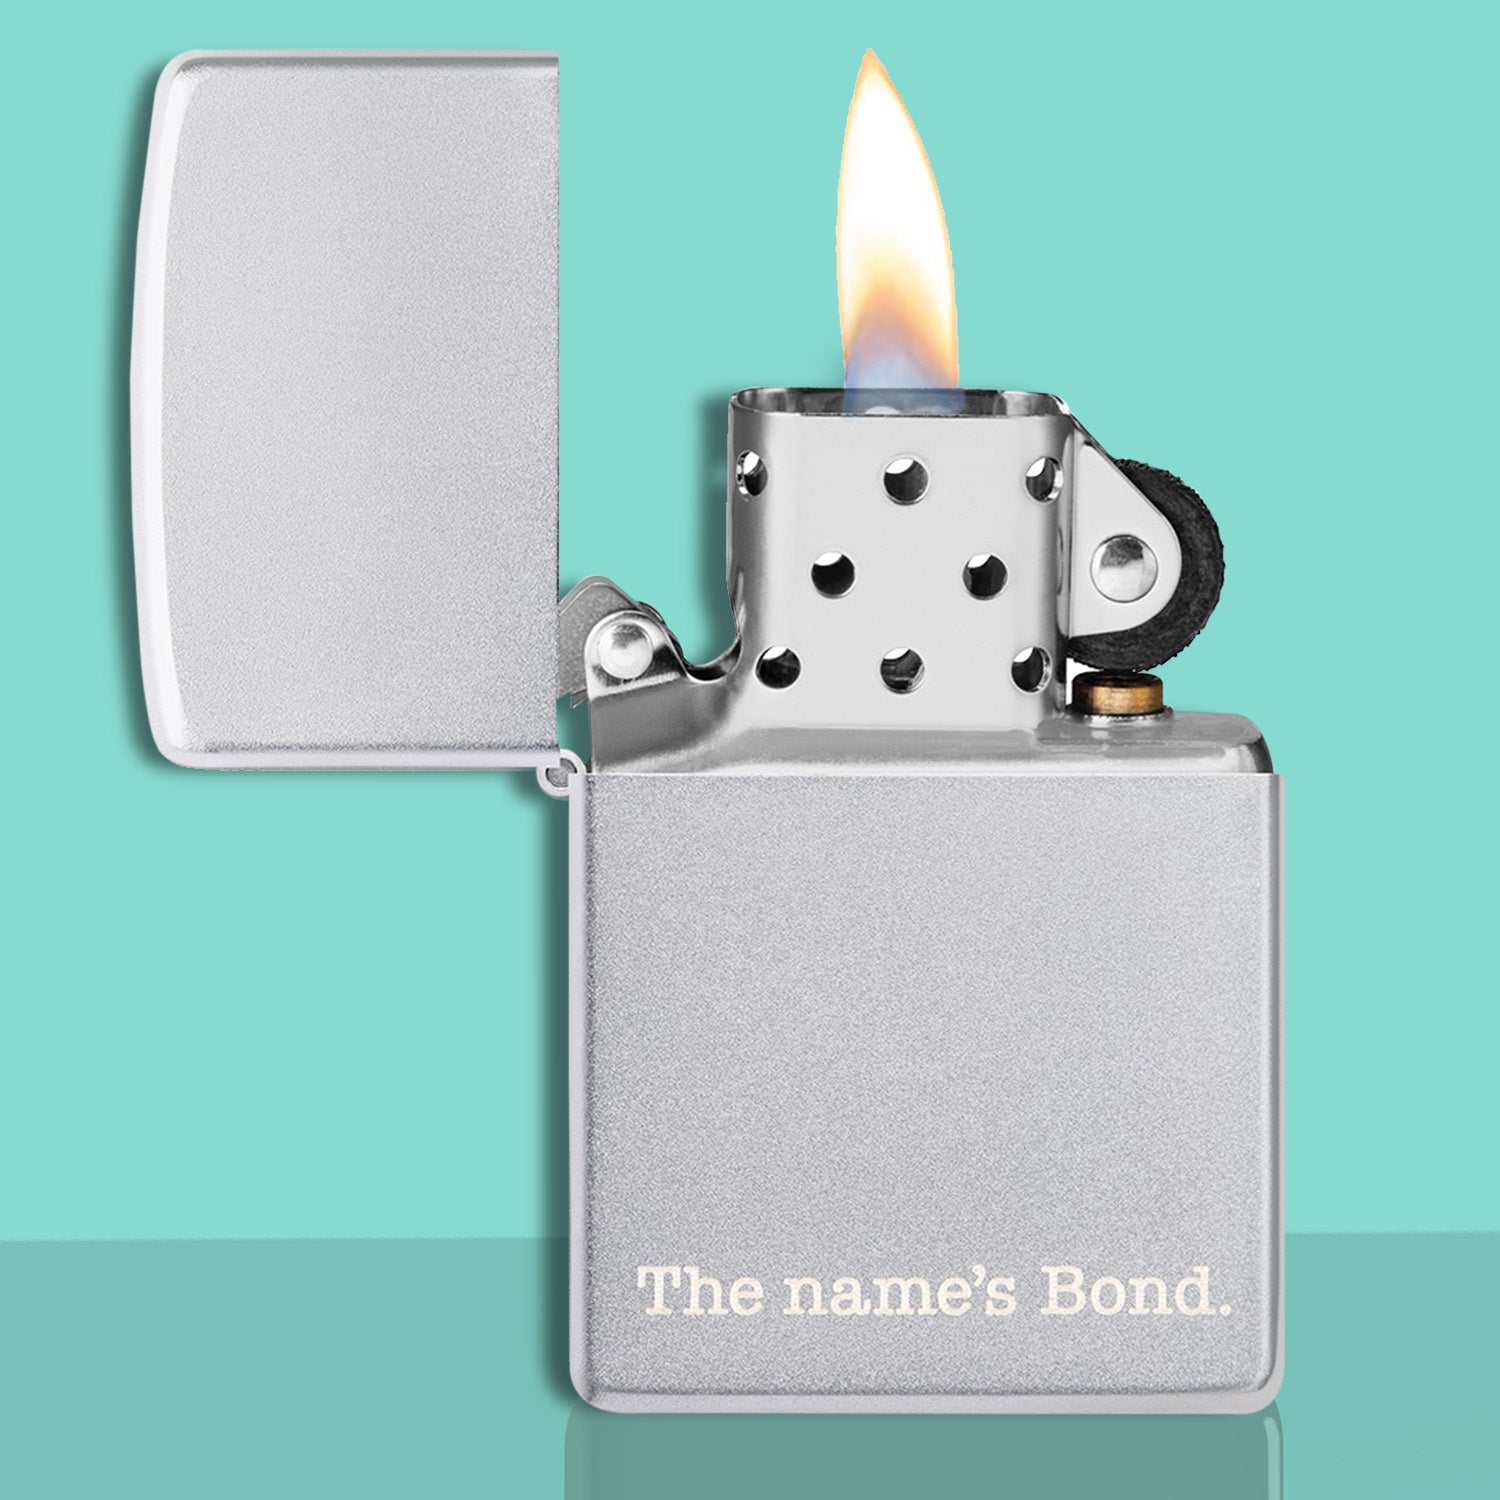 James Bond "The Name's Bond" Lighter - By Zippo 007Store